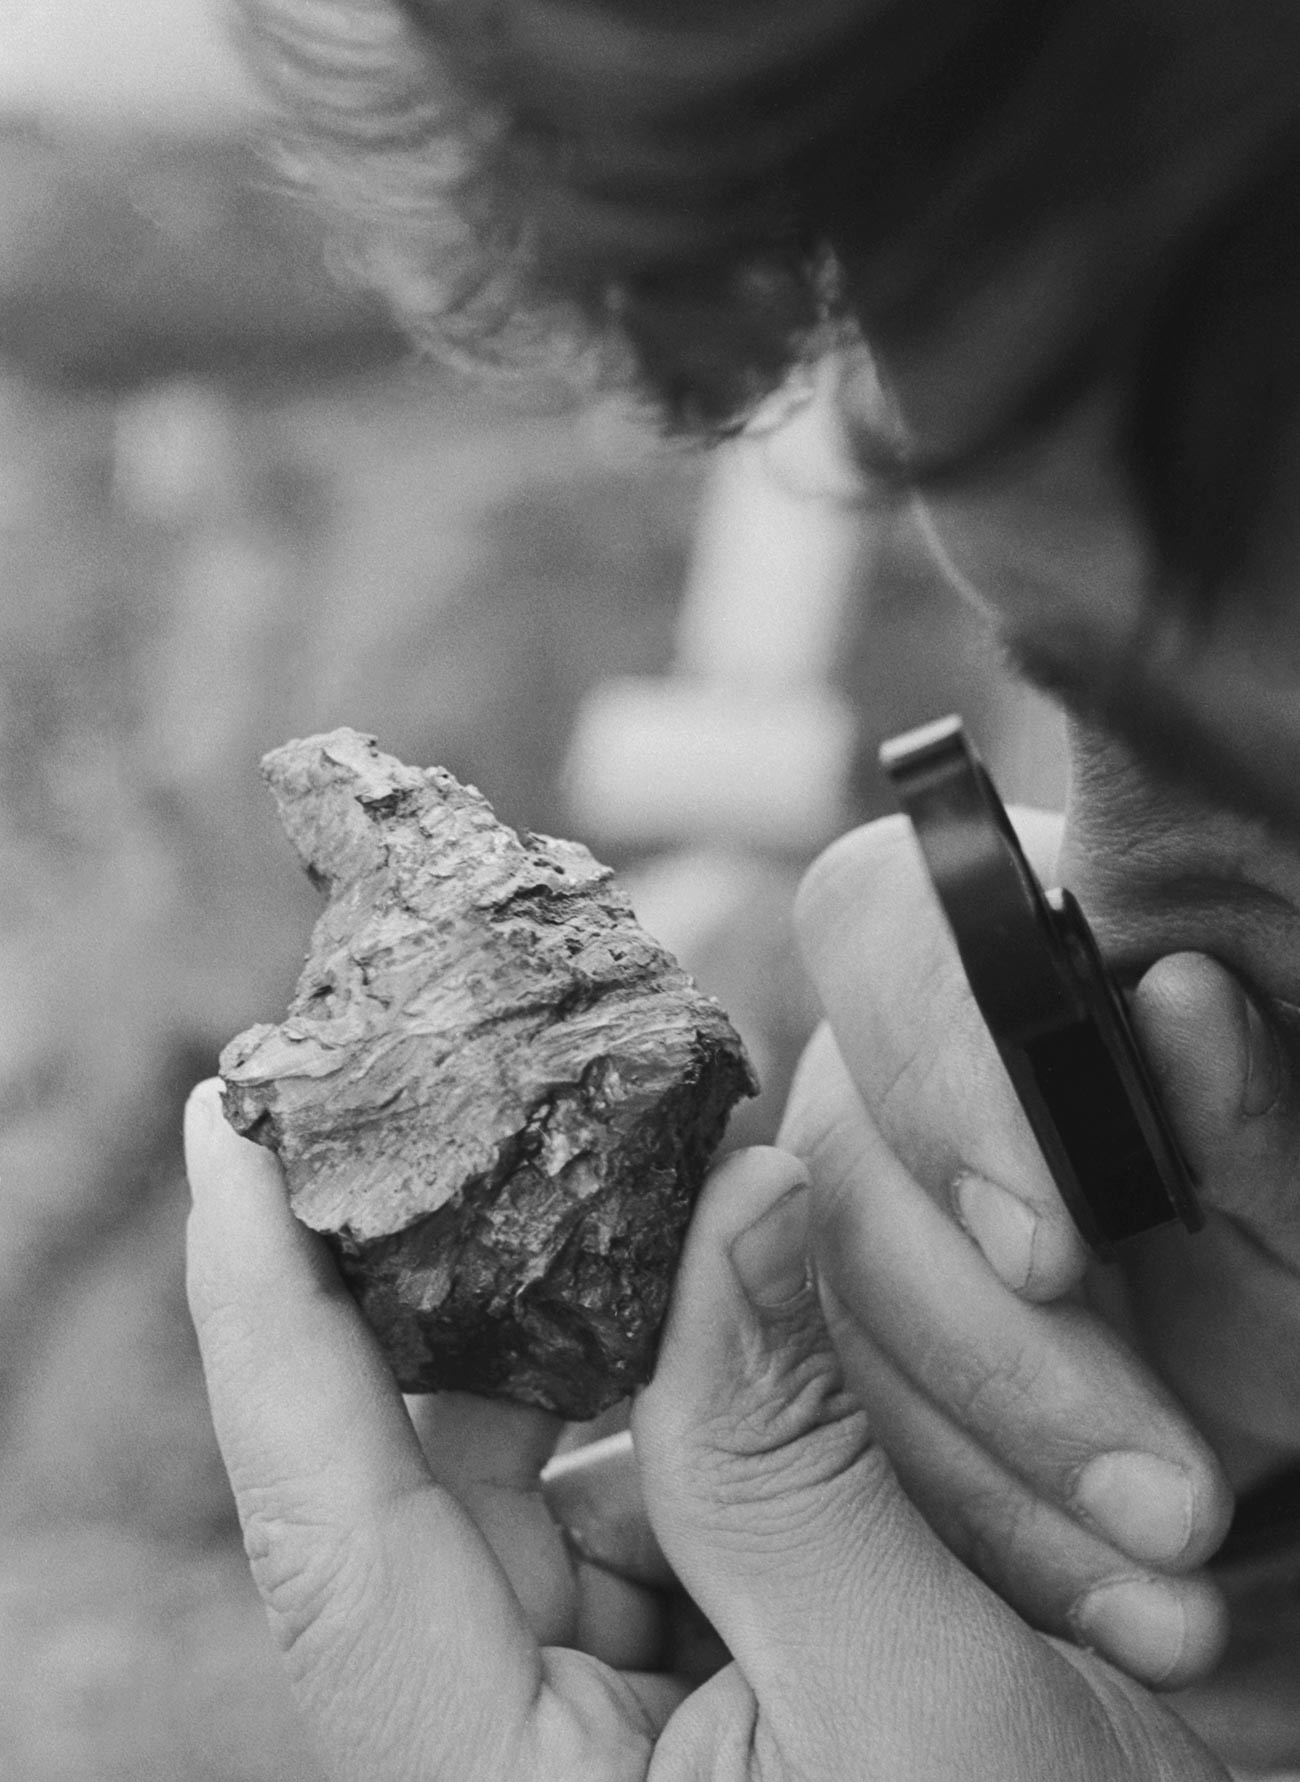 1990. A scientist looks at the piece of Sterlitamak meteorite.